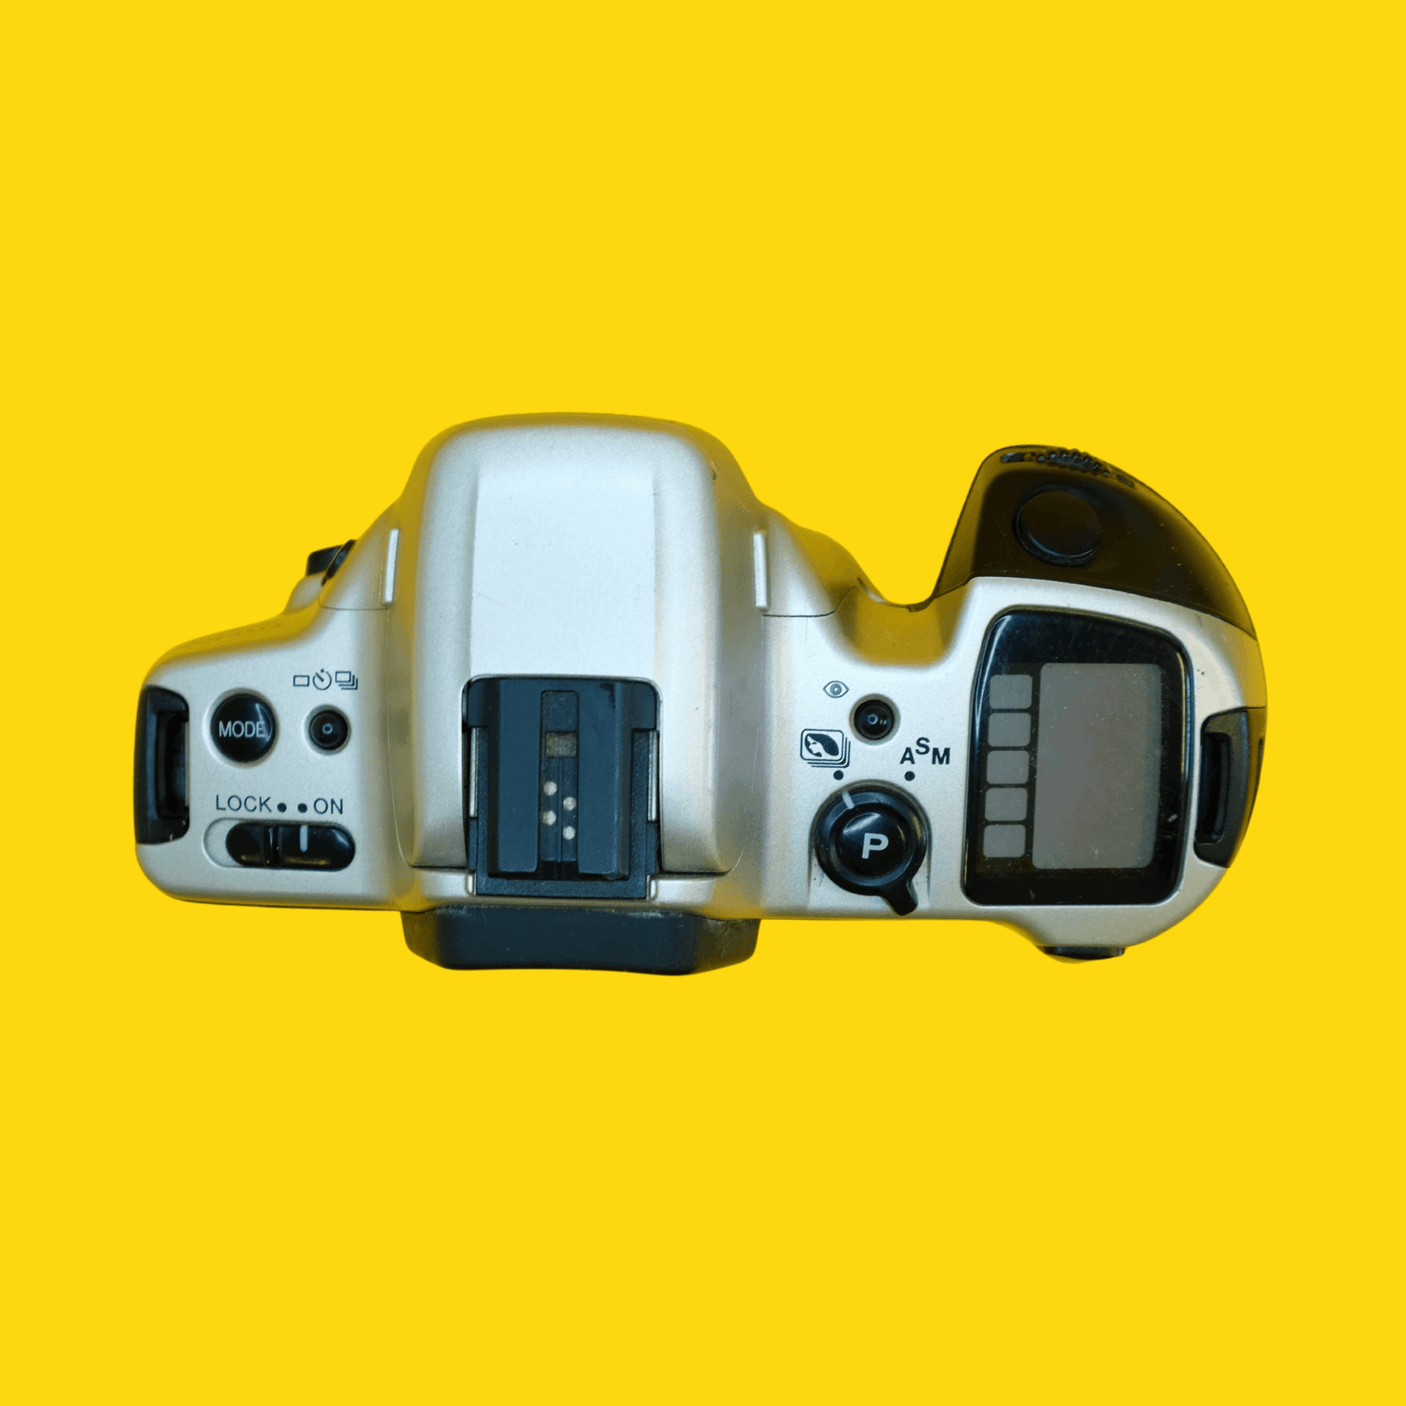 Minolta Dynax 500si Automatic 35mm SLR Film Camera - Body Only